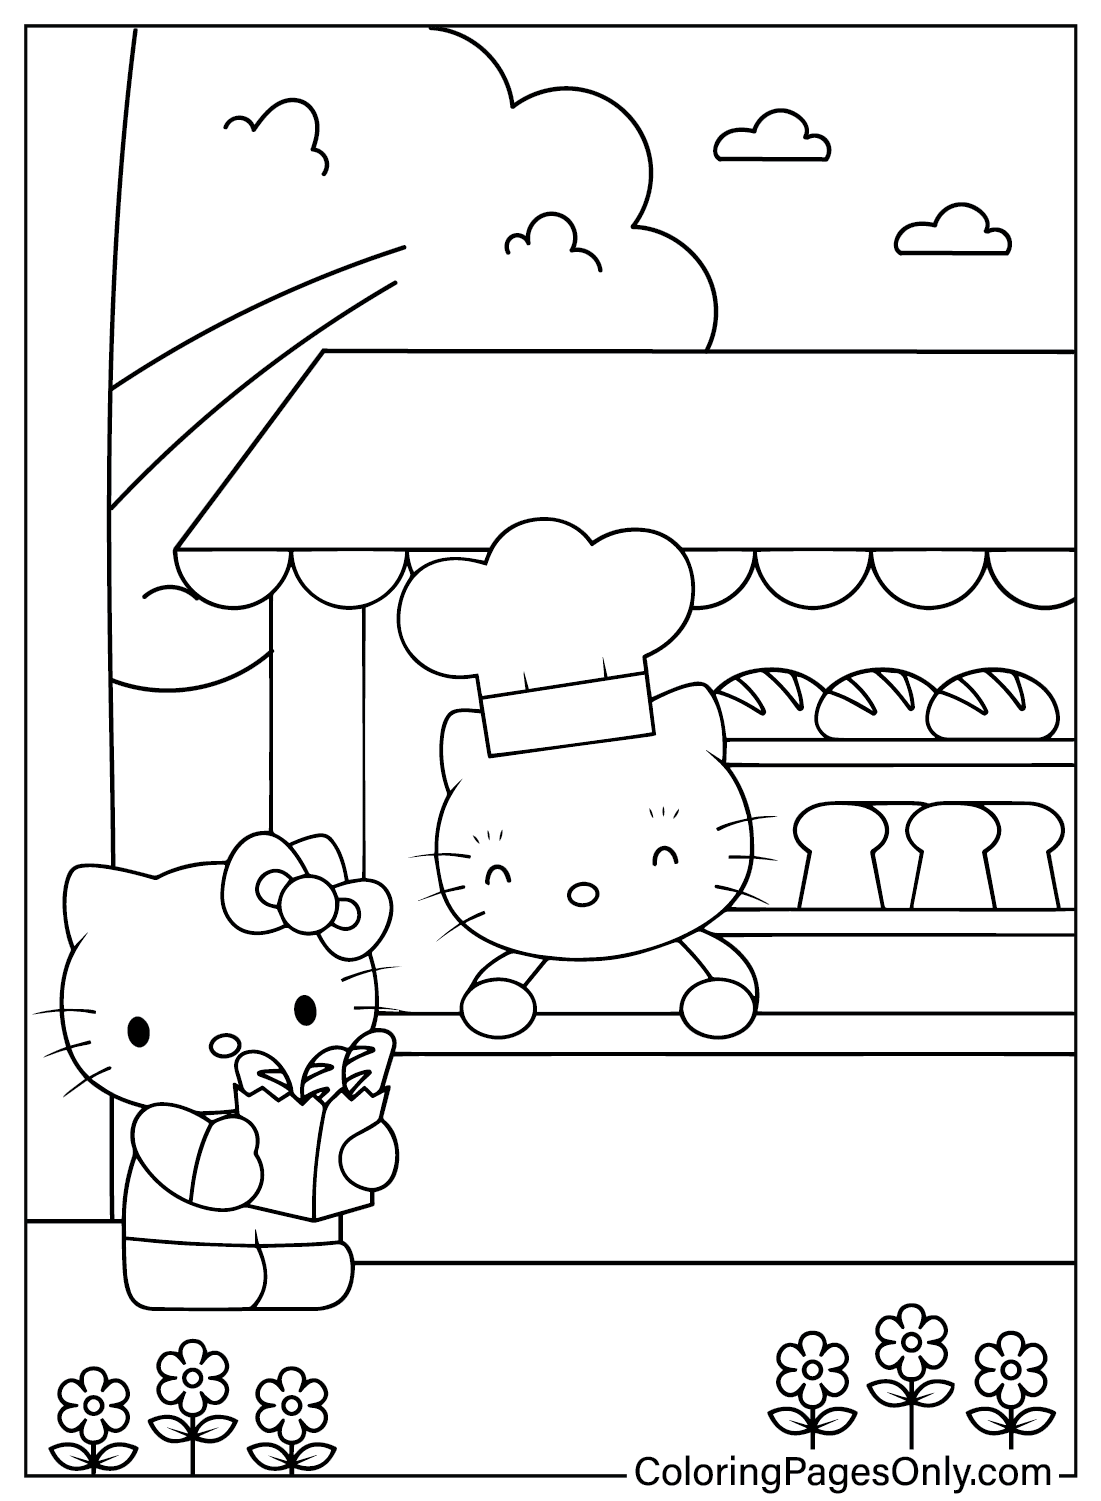 Página para colorir da Hello Kitty grátis